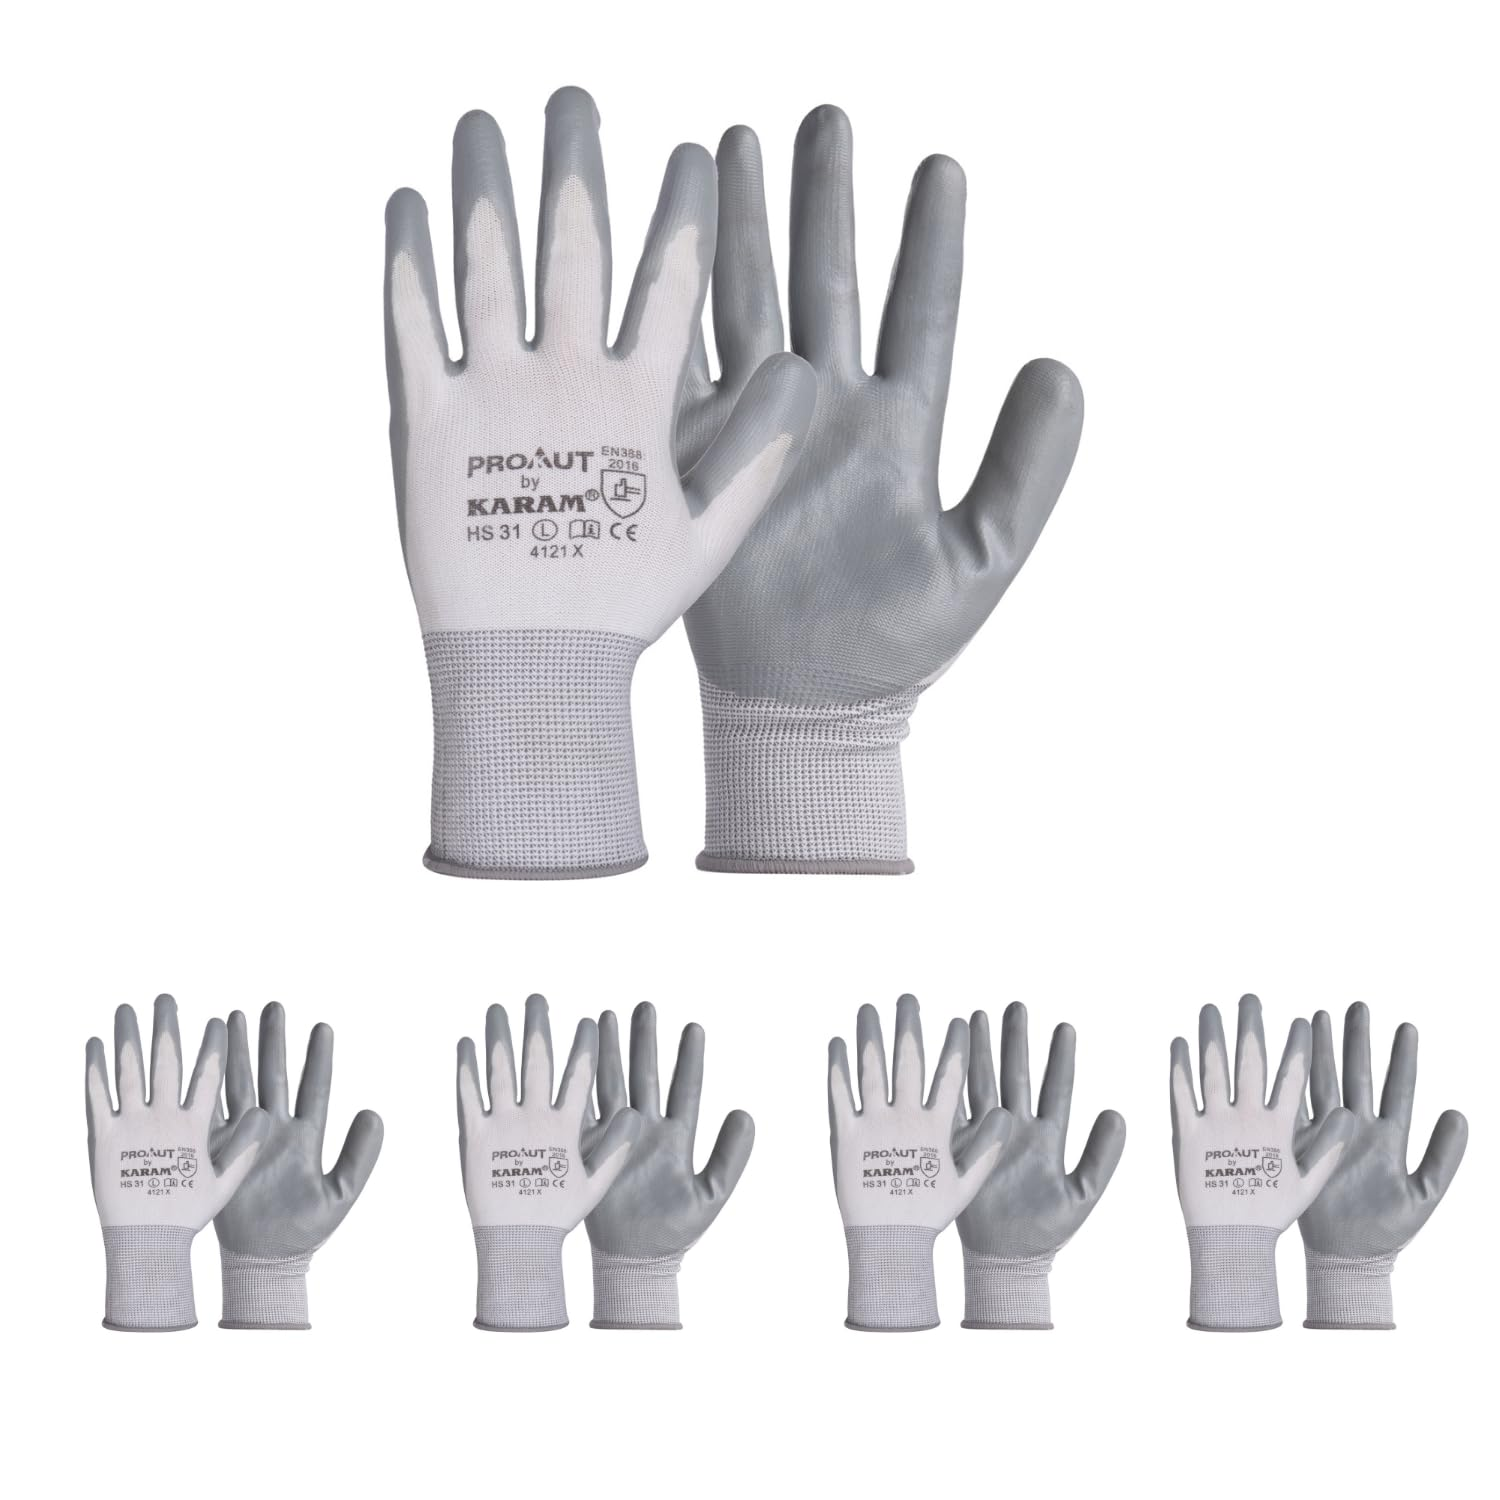 Karam Safety gloves HS 31 4